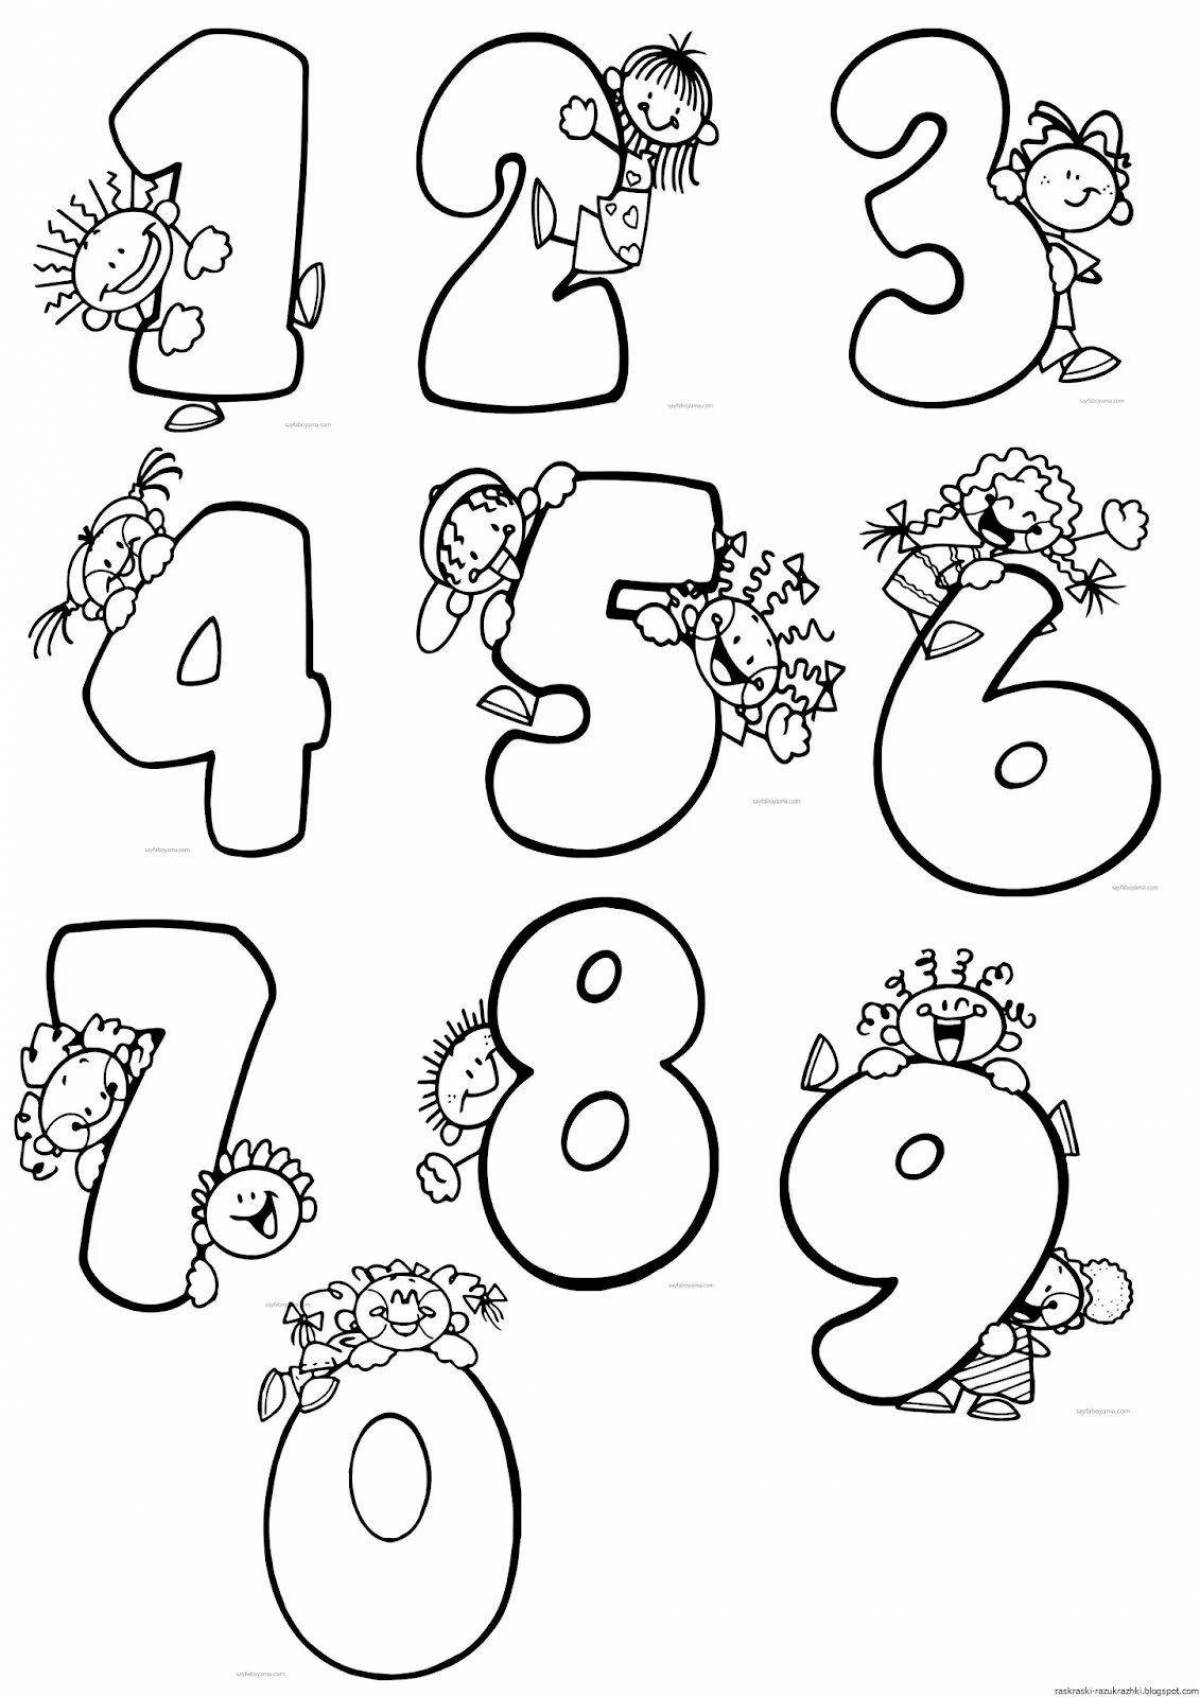 Fun numbers for kids #15